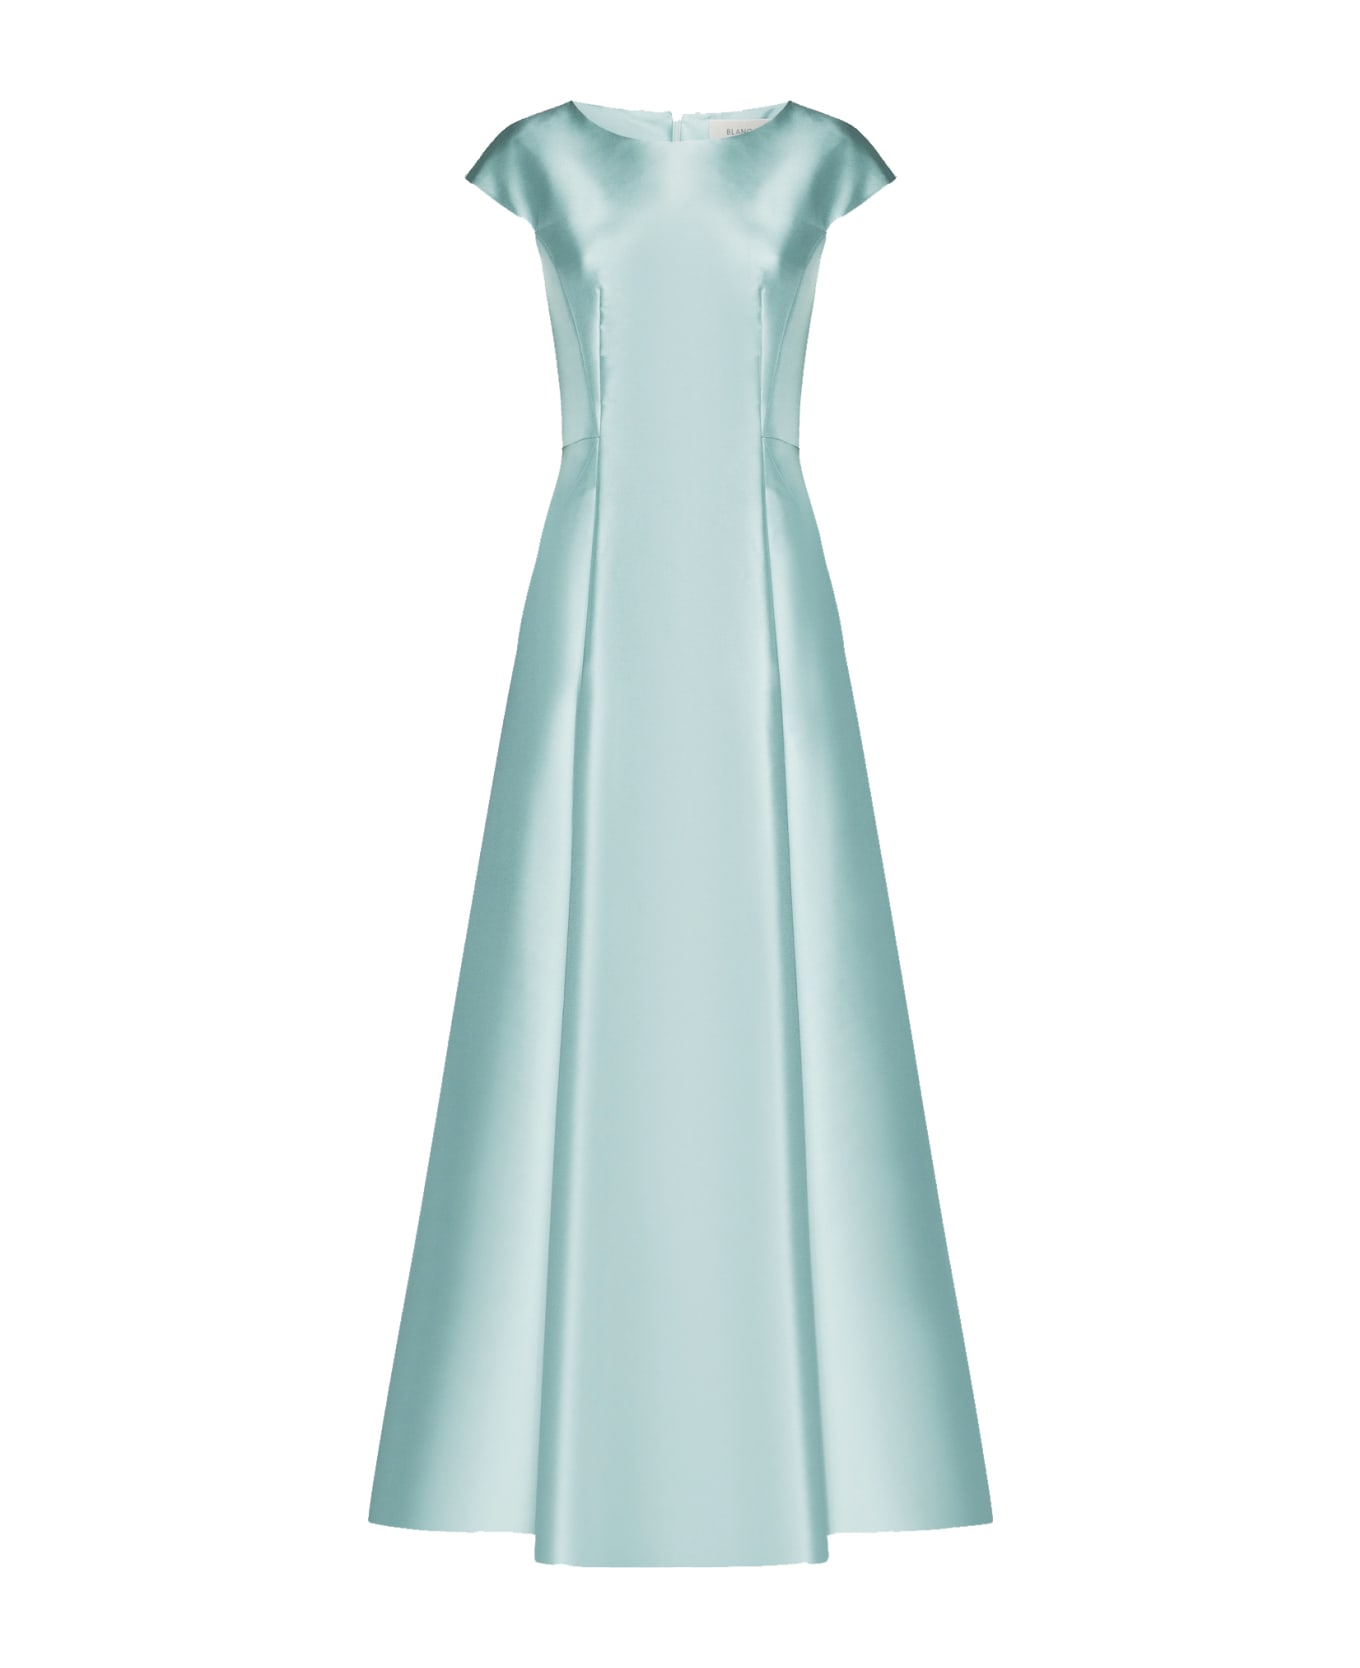 Blanca Vita Dress - Acqua